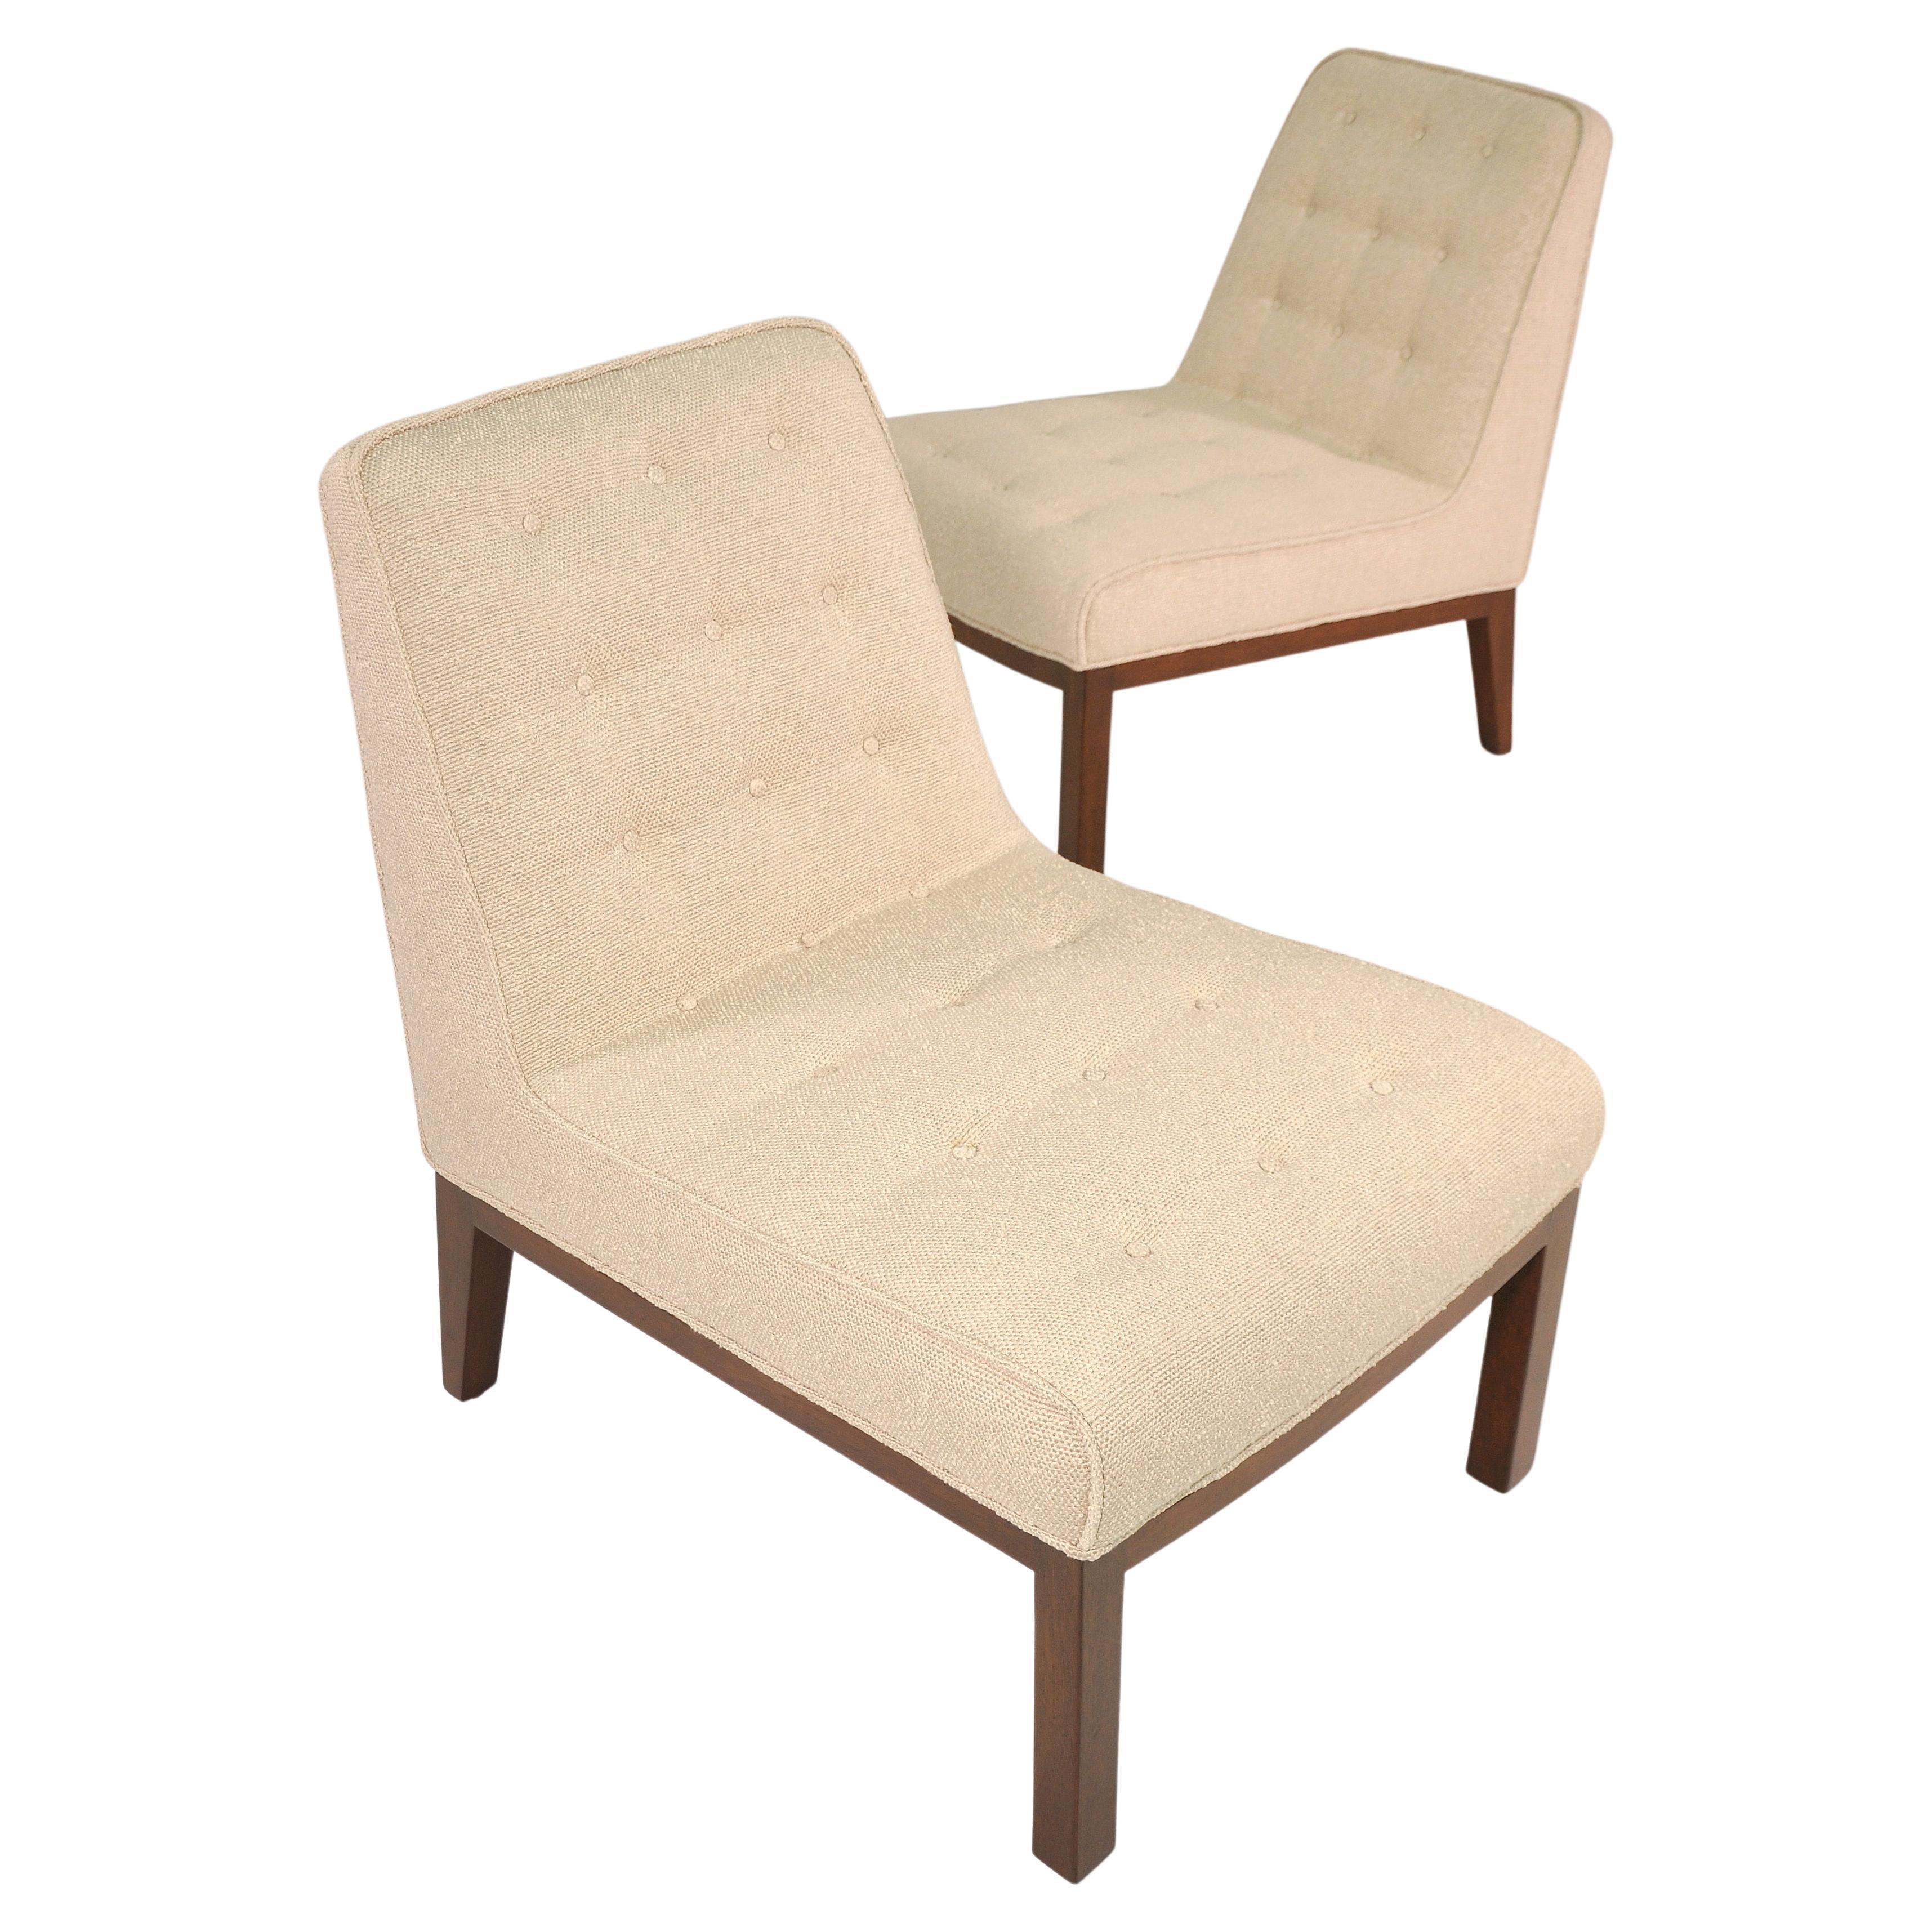 Mahogany Beige Bouclé Sophia Slipper Chair by Edward Wormley for Dunbar - a Pair For Sale